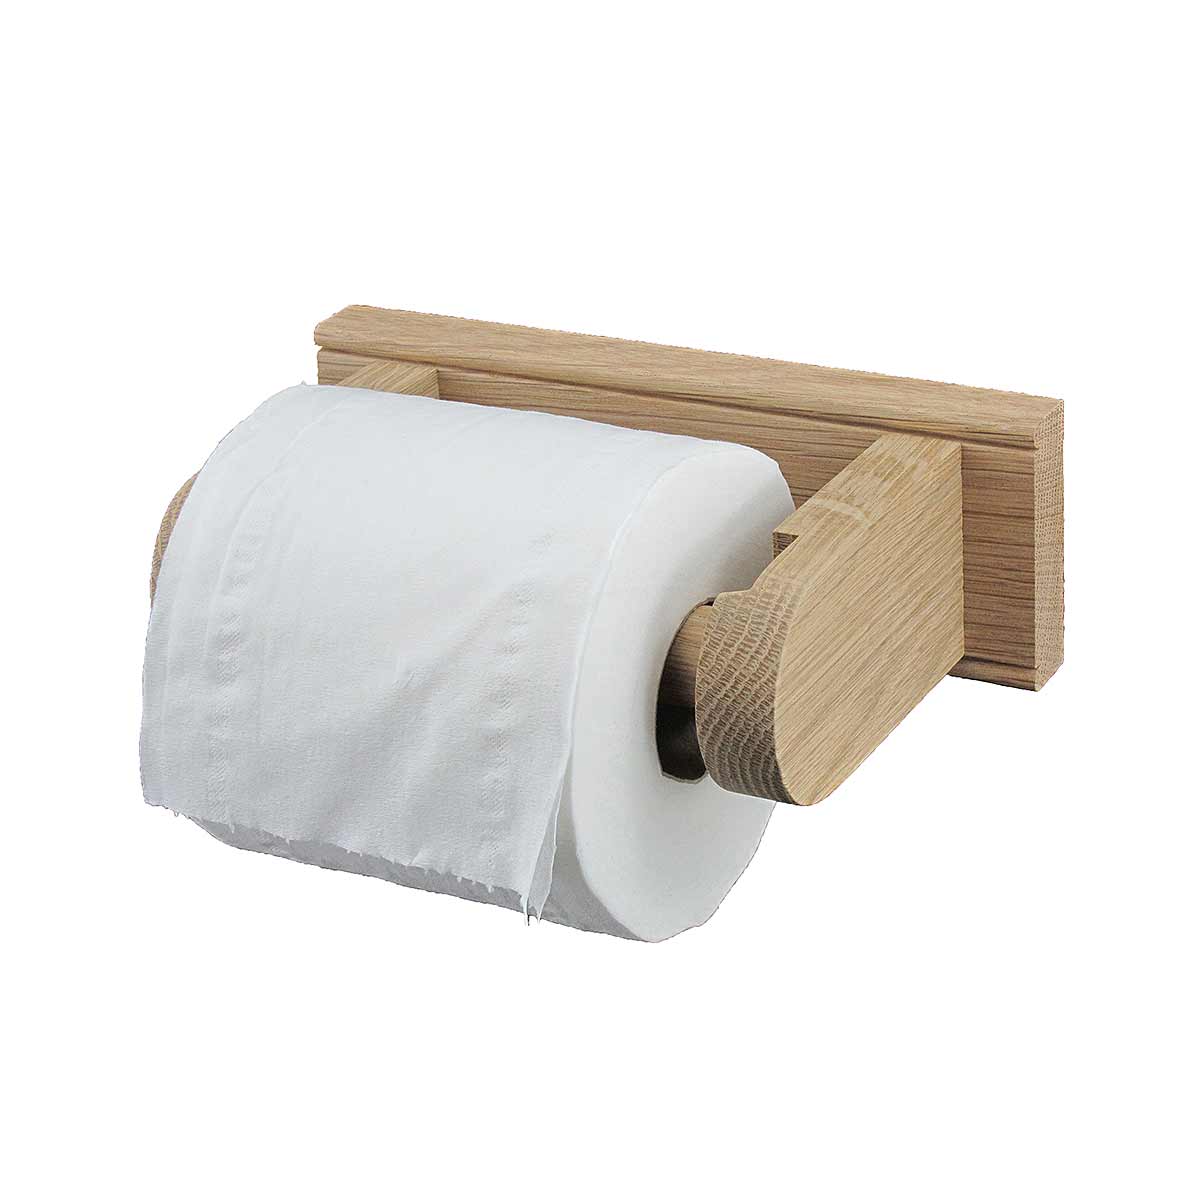 toilet roll on holder on white background